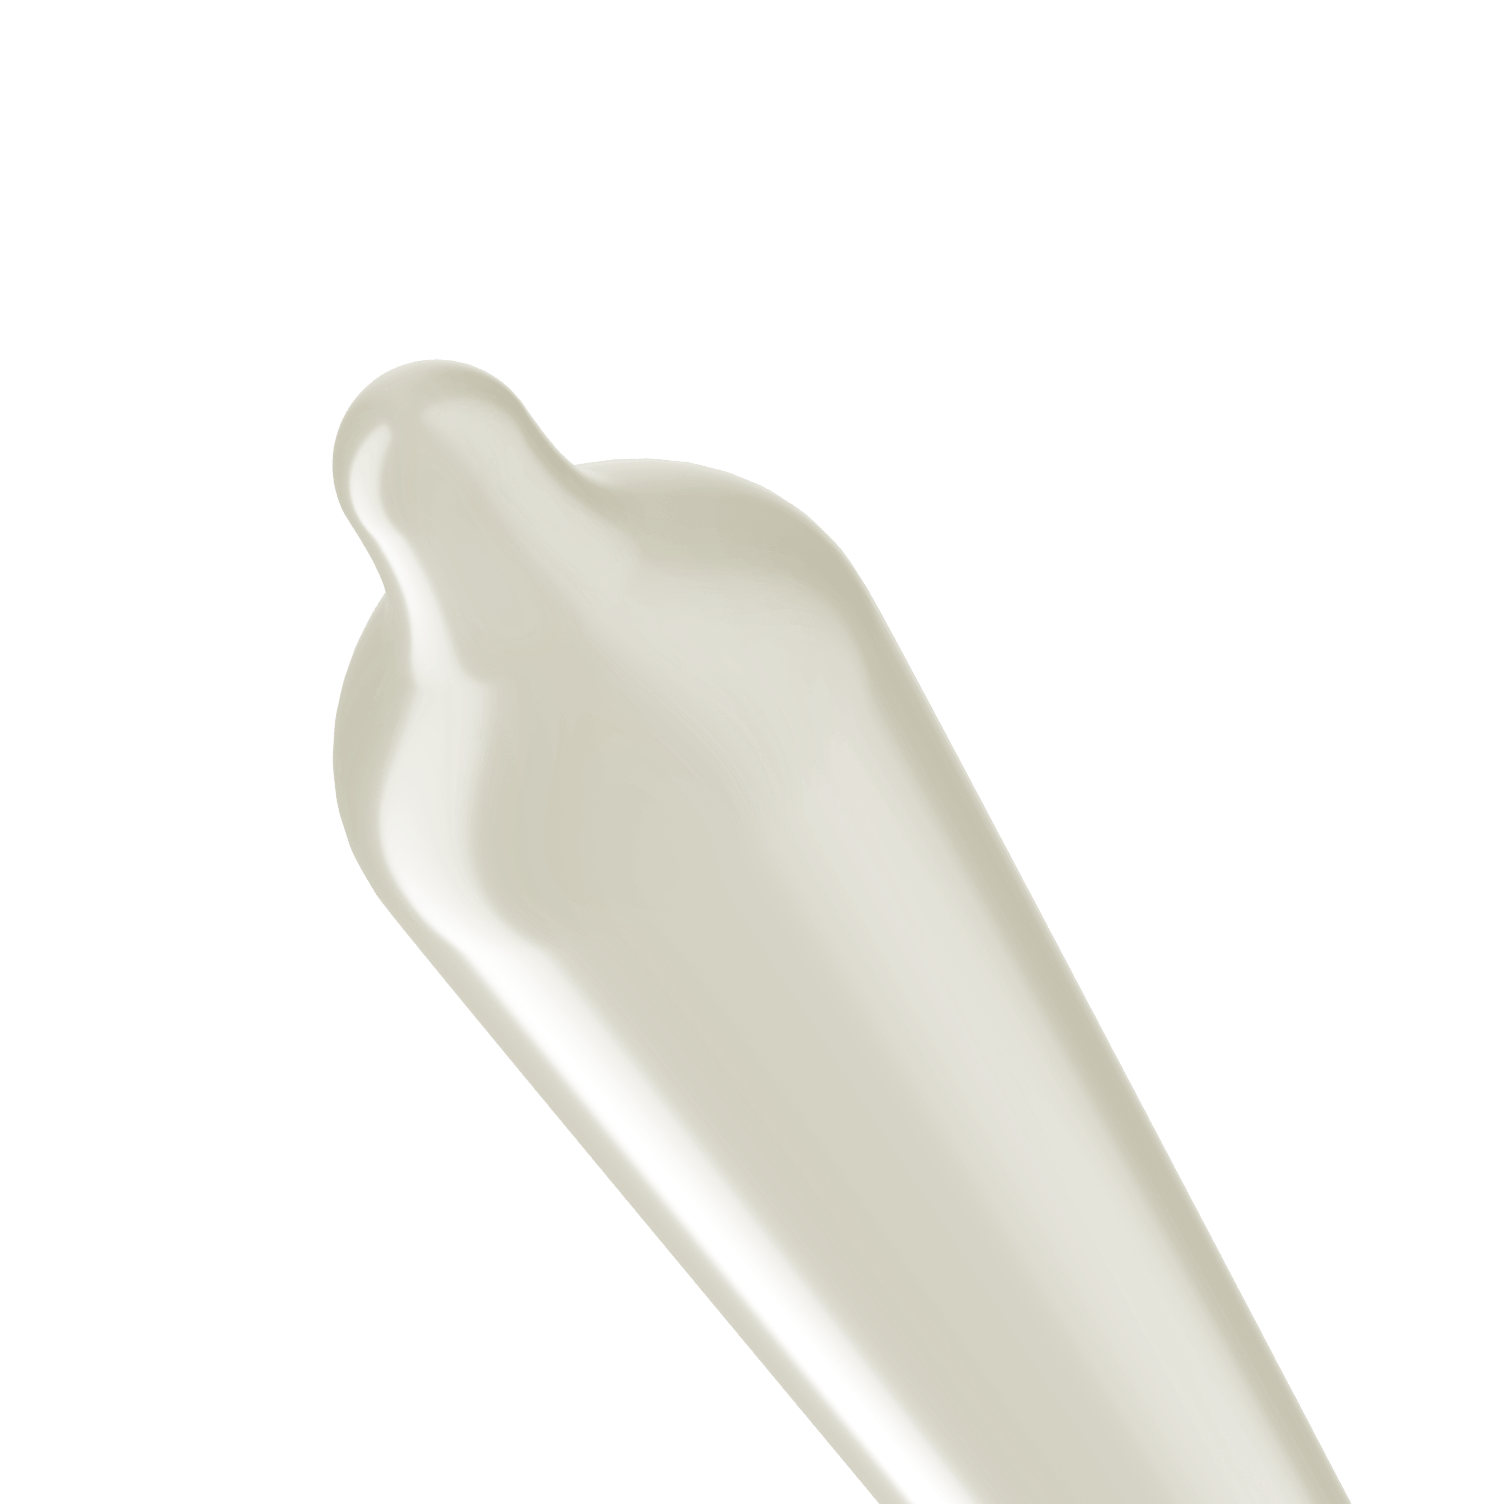 Magnum large condom with reservoir tip.